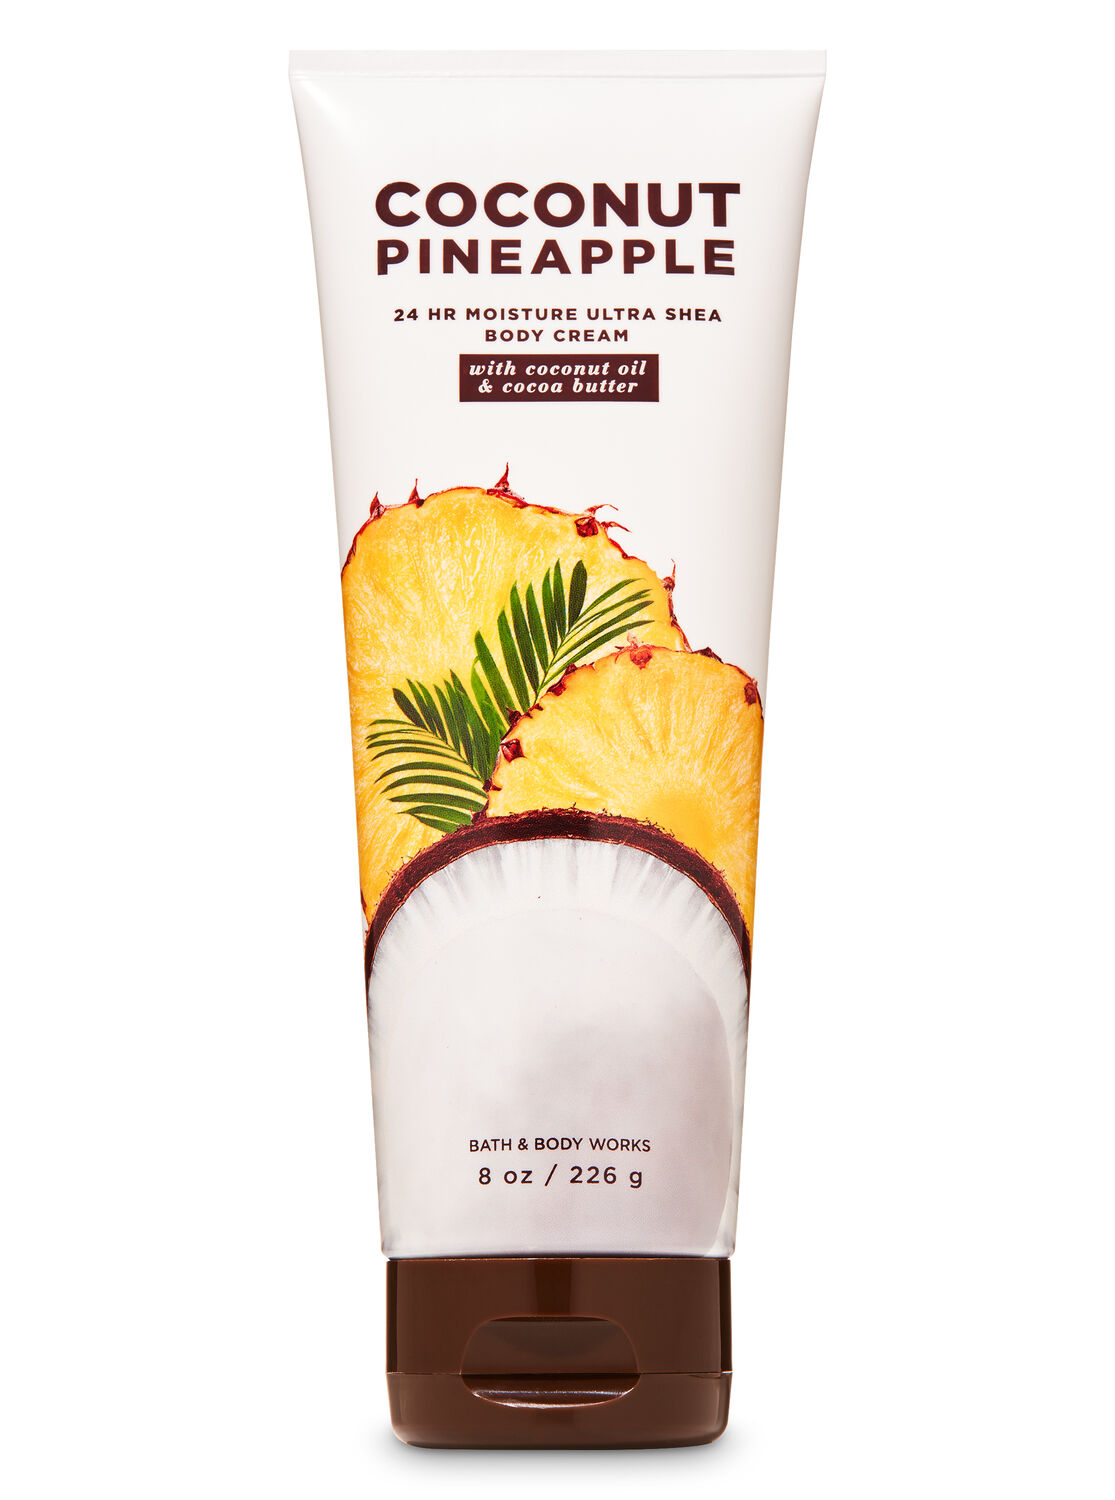 Coconut Pineapple Ultra Shea Body Cream